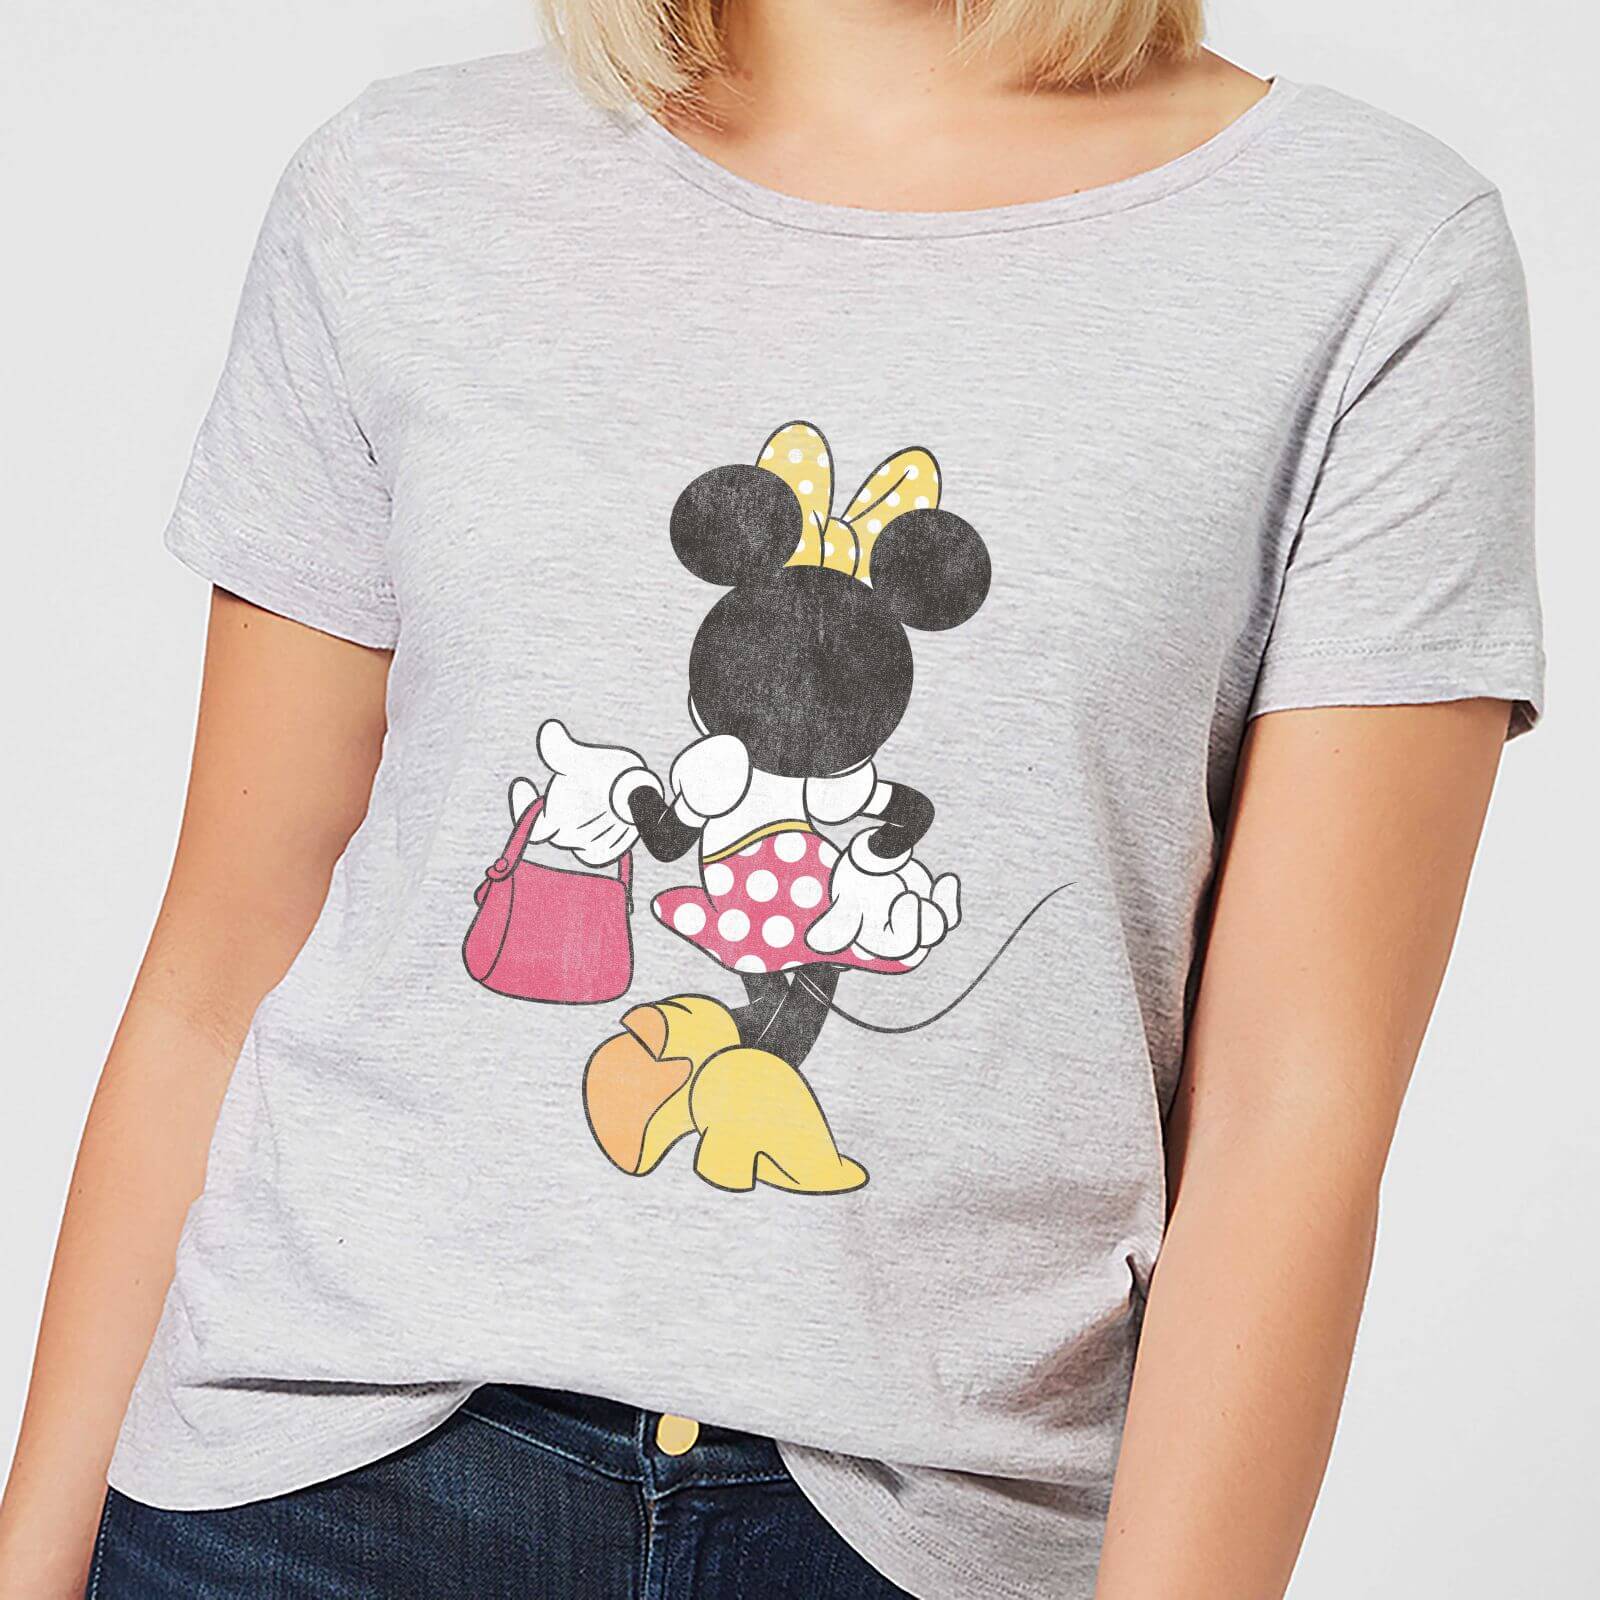 Disney Mickey Mouse Minnie Mouse Back Pose Women's T-Shirt - Grey - XXL - Grey